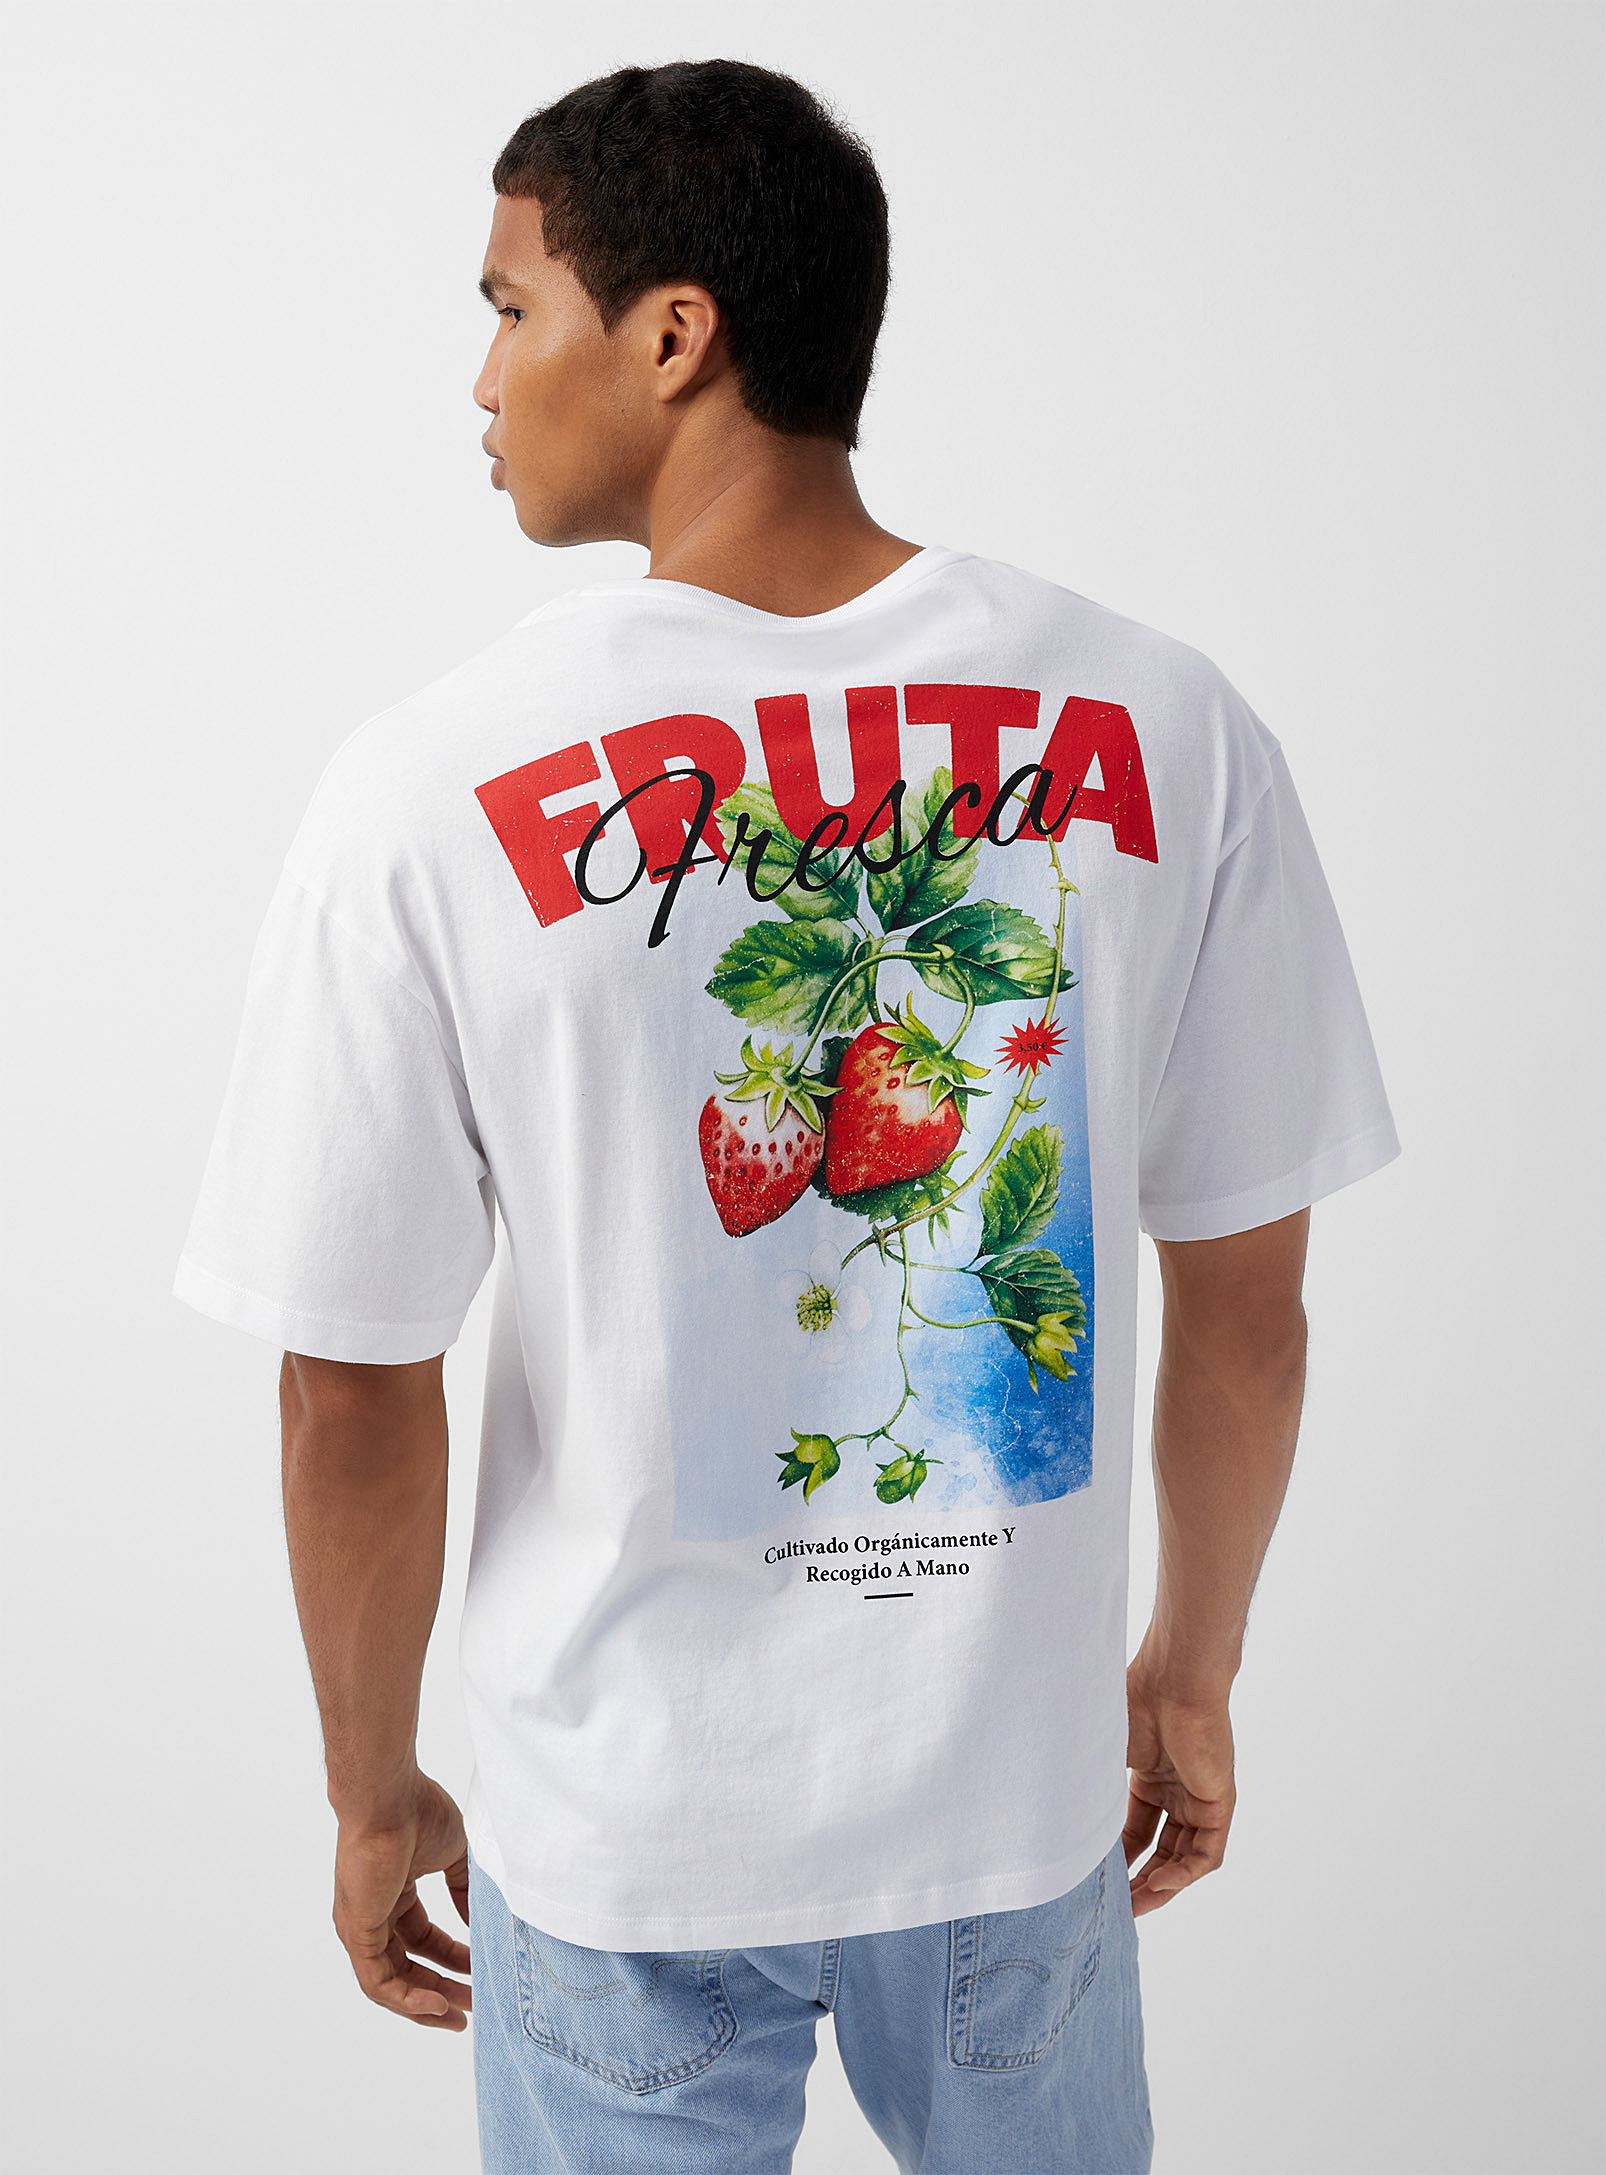 Jack & Jones - Men's Fruta Fresca T-shirt